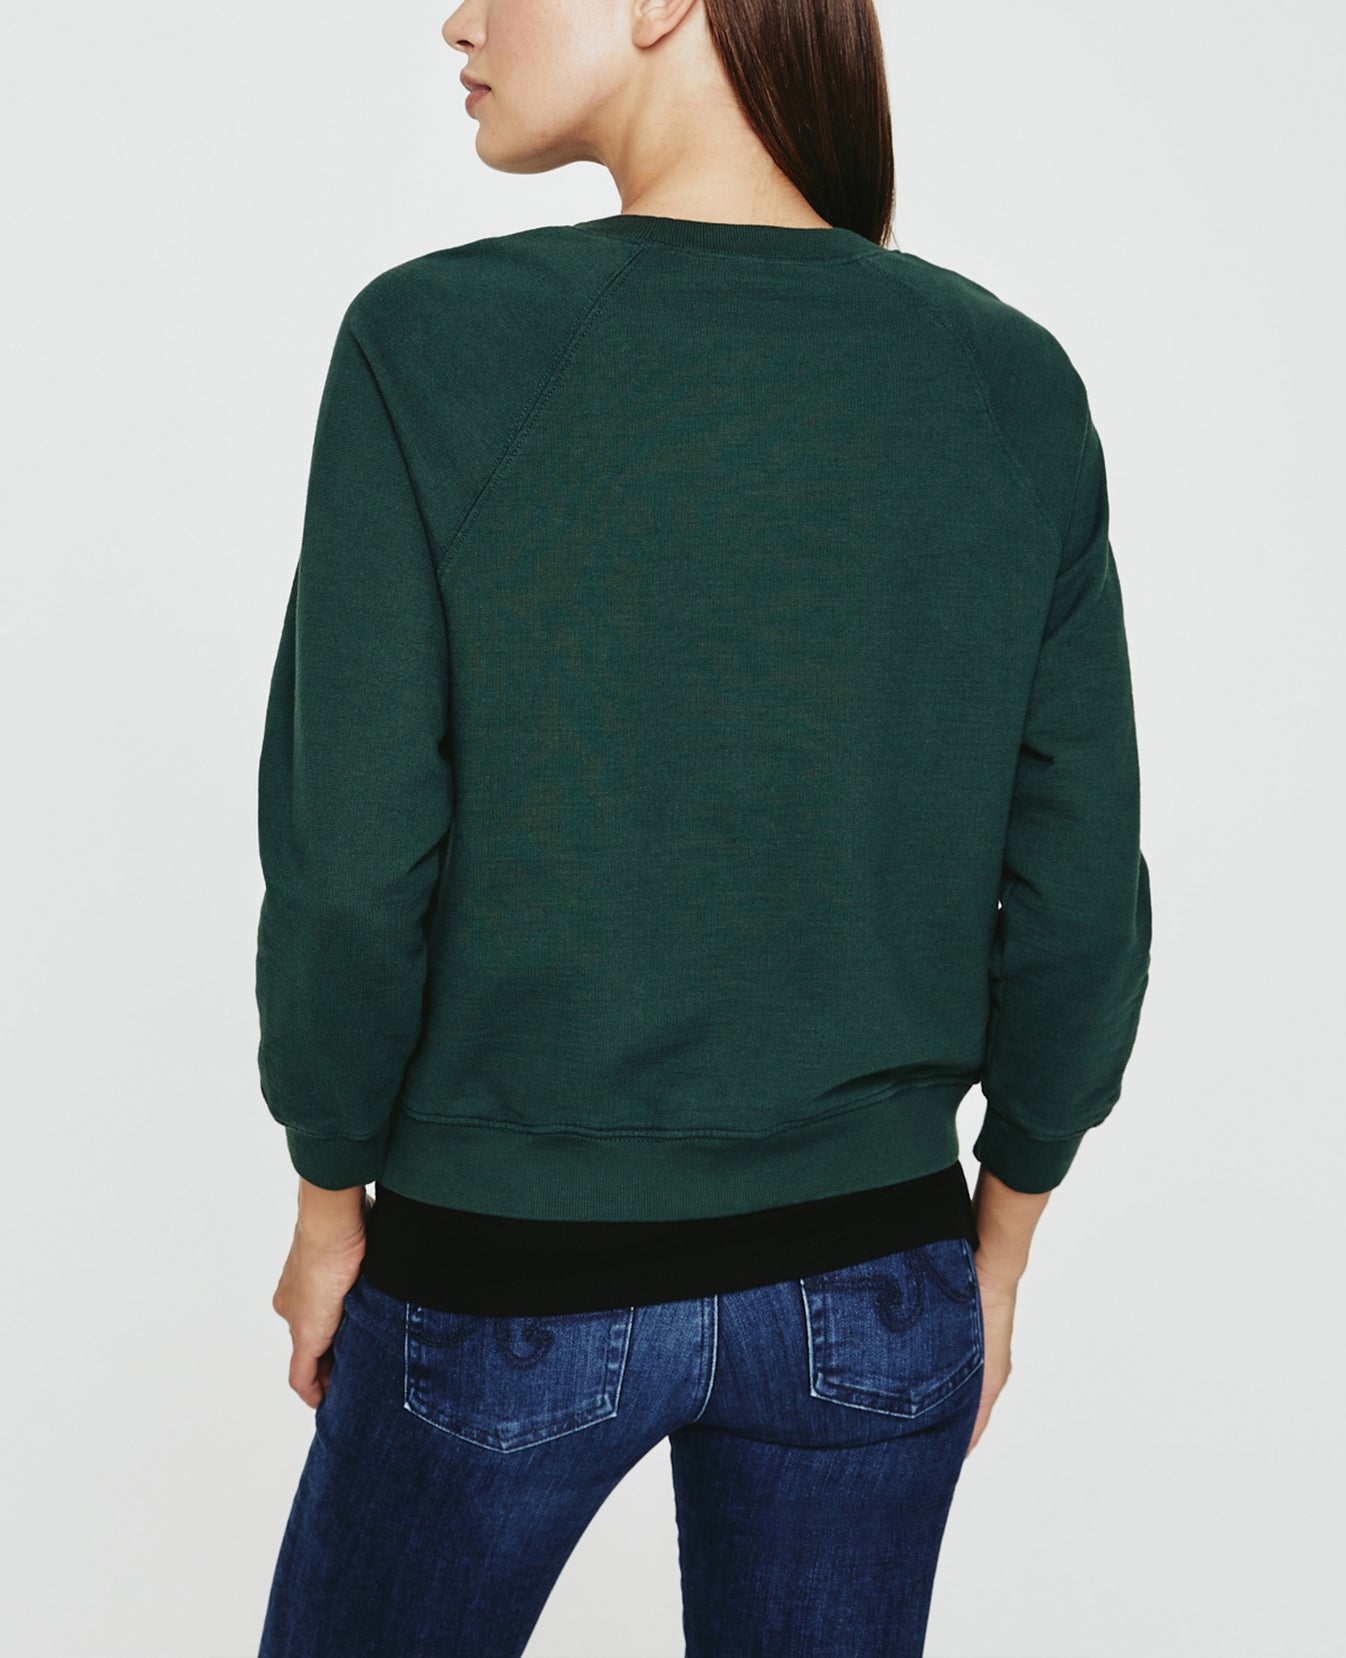 Jadyn Sweatshirt Rich Verdure Vintage Sweatshirt Women Tops Photo 5